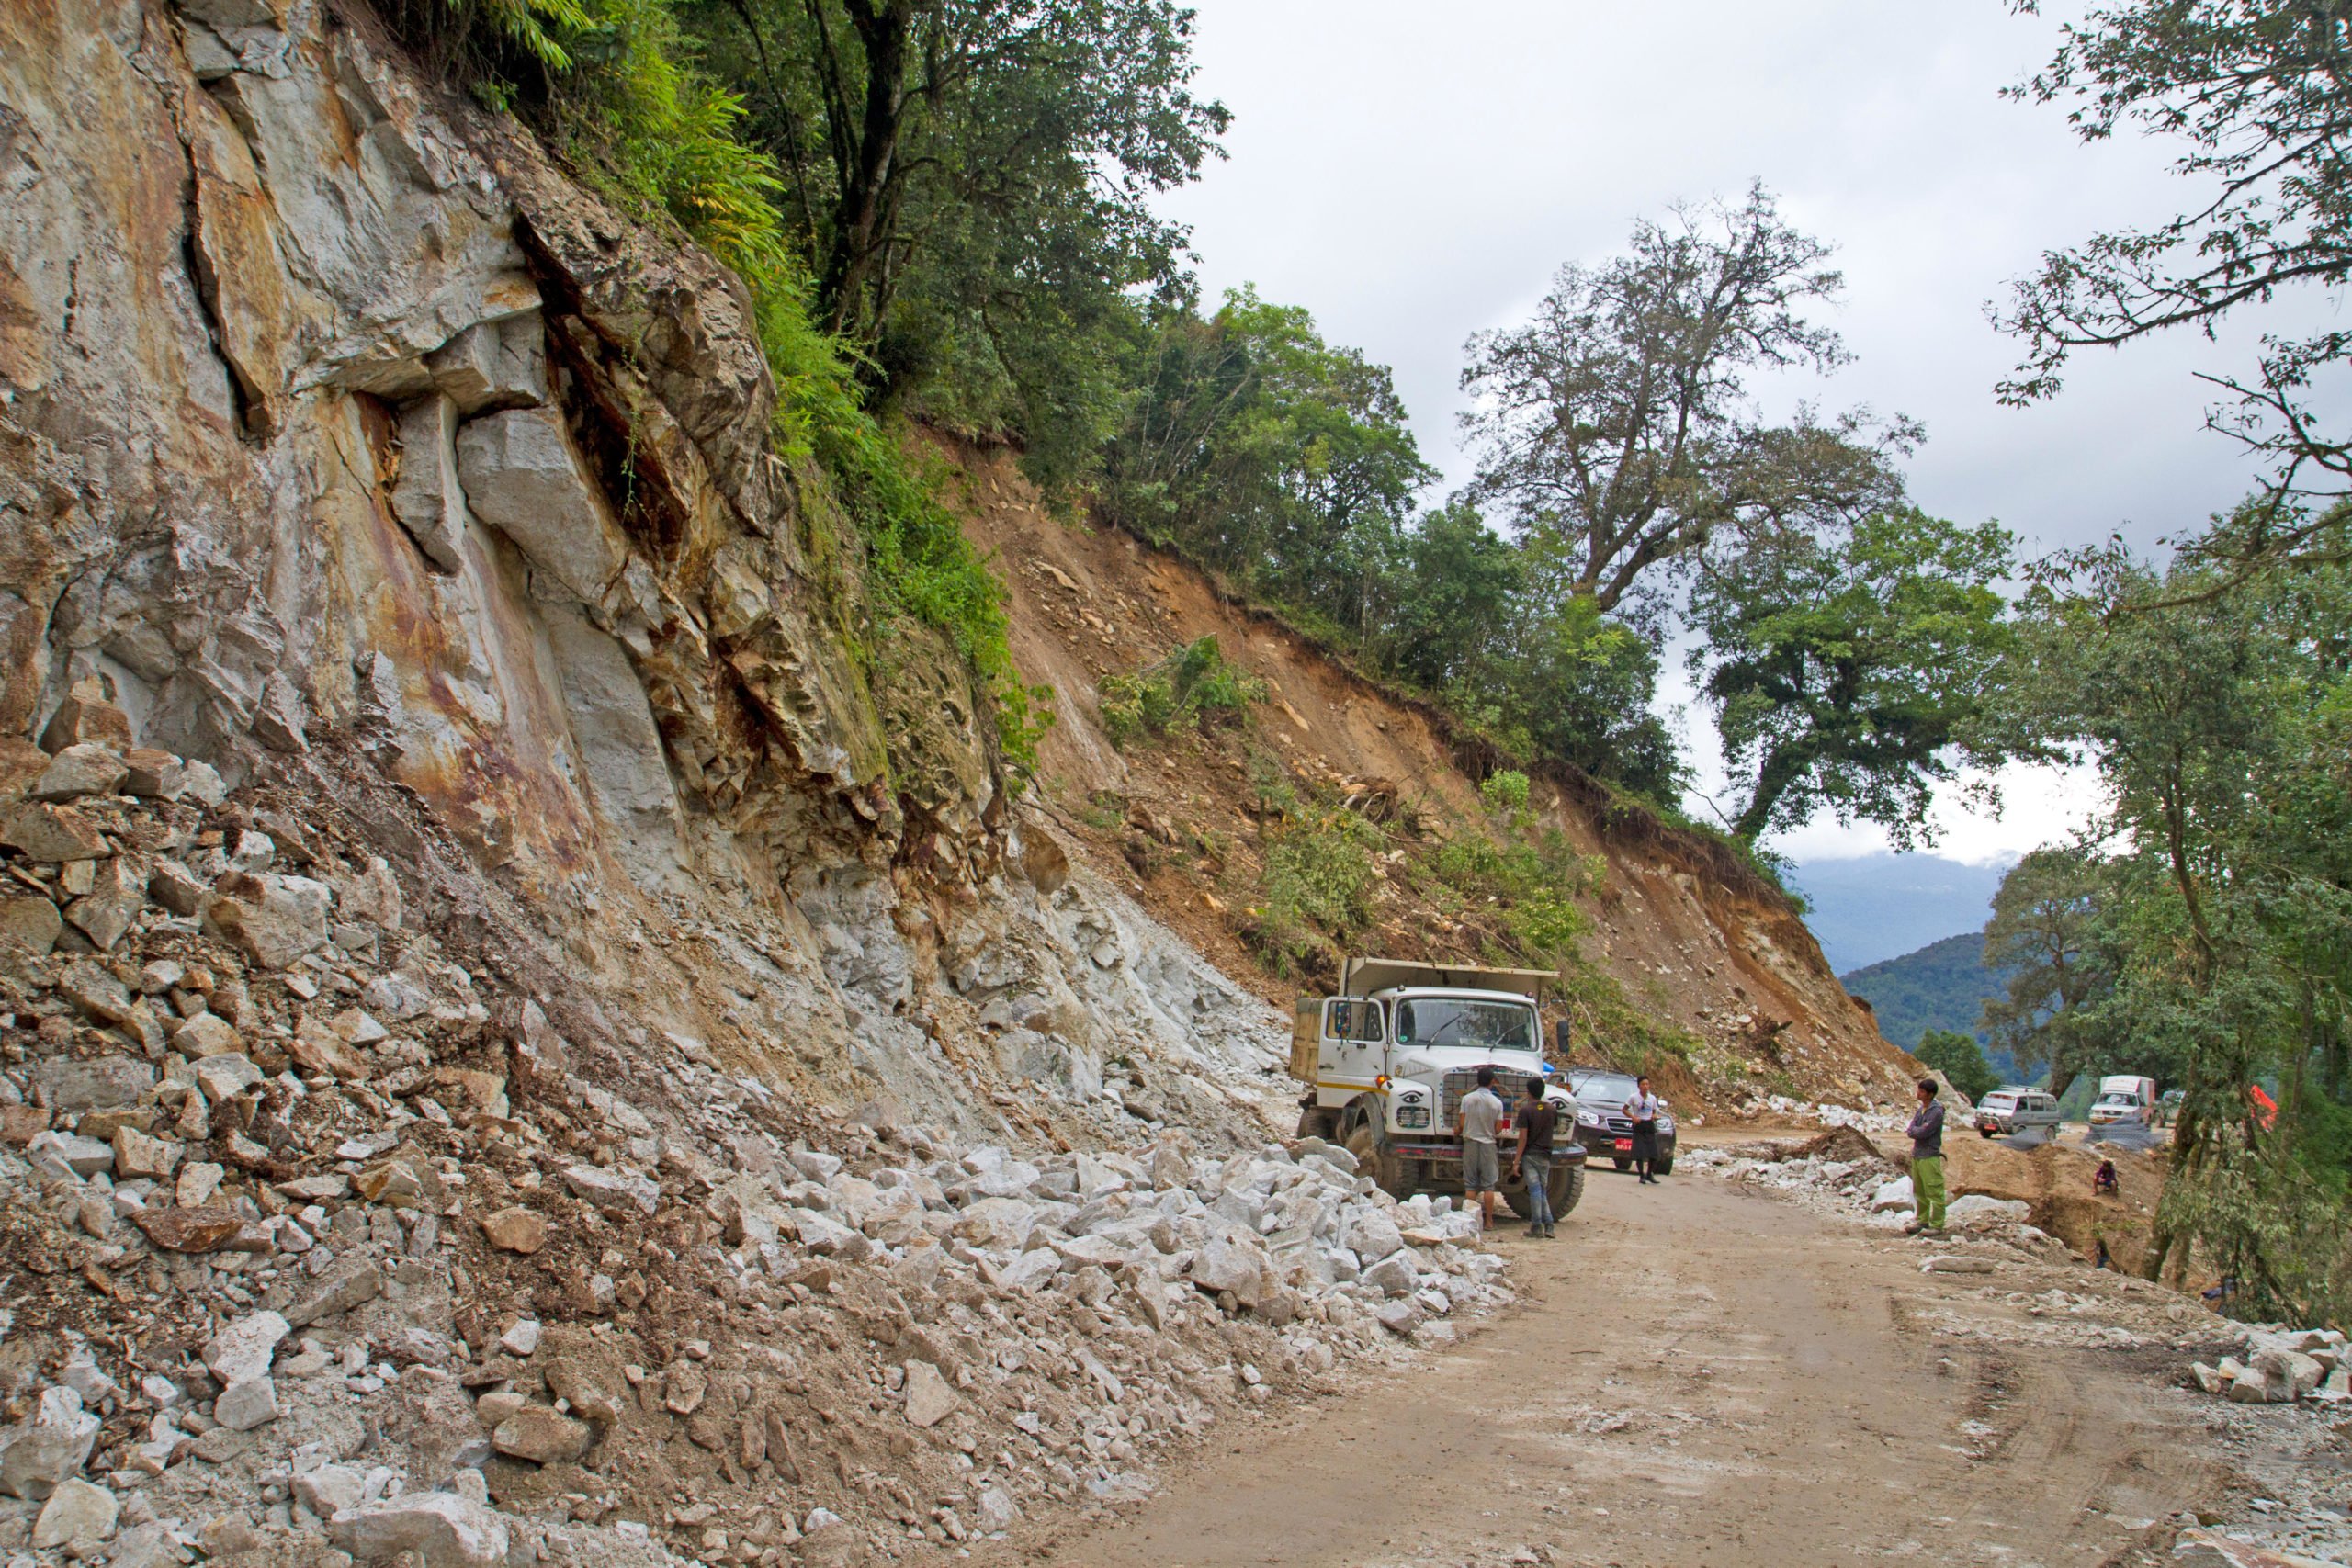 <p>Landslide on Bhutan’s national highway in August 2016 near the Phobjikha Valley (Image: Alamy)</p>